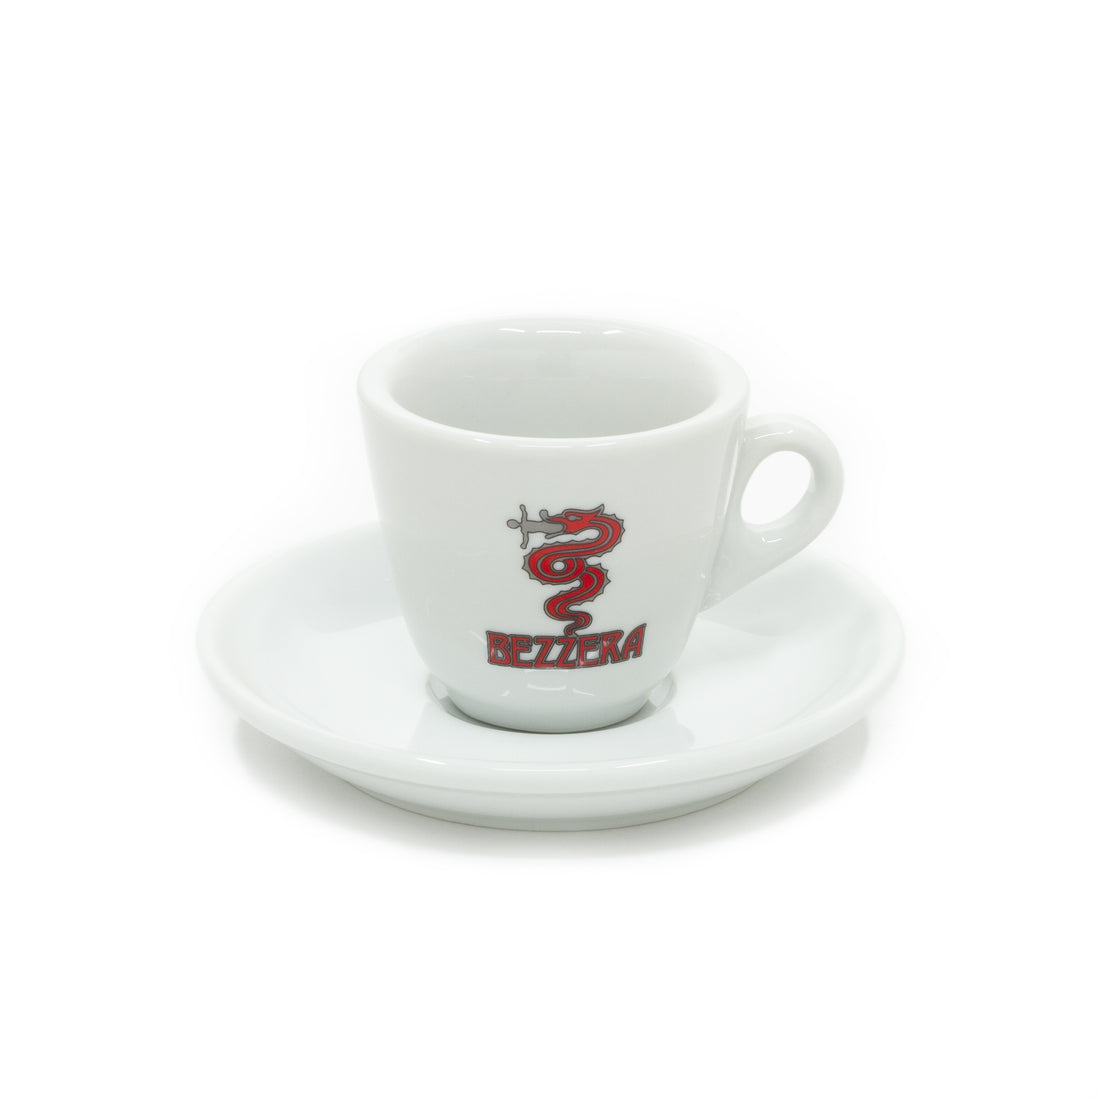 Porcelain Lavazza espresso cups - Black Collection